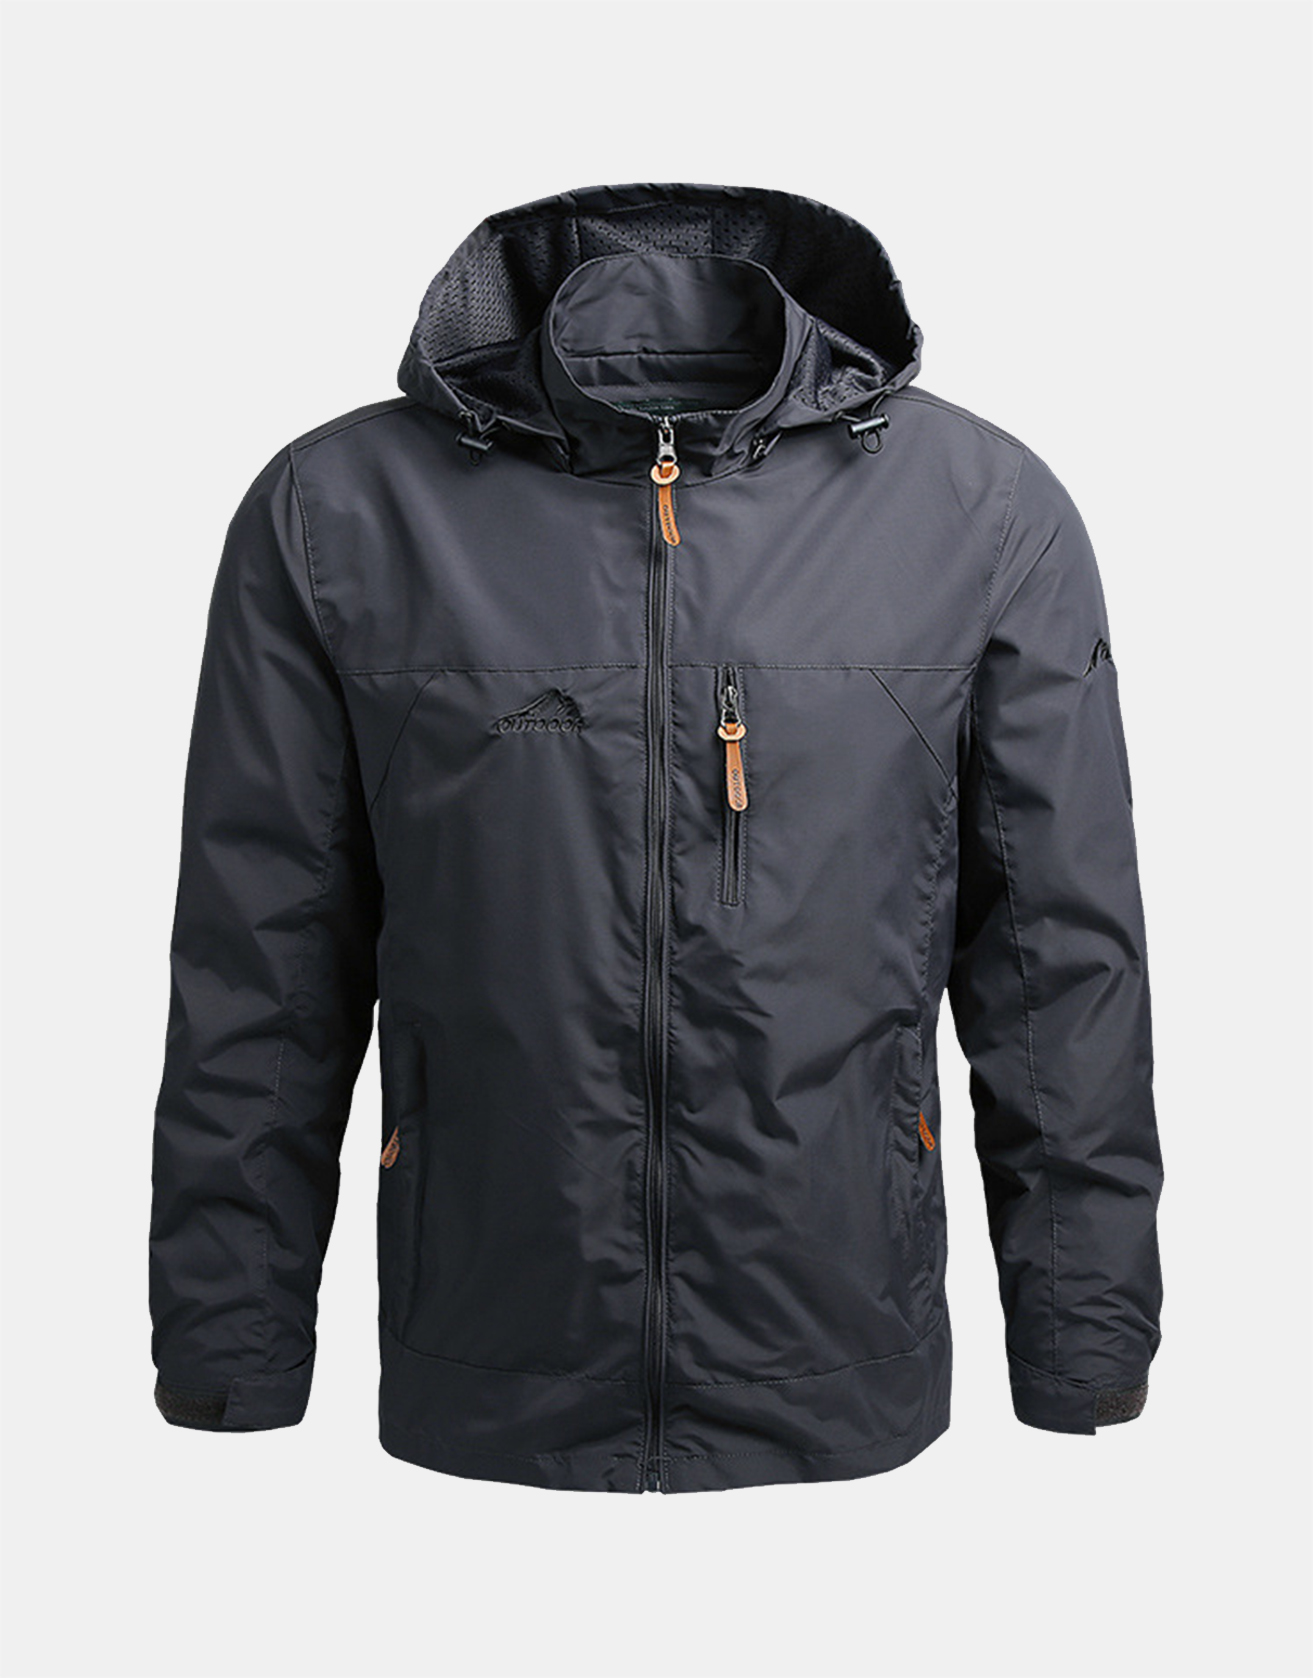 Outdoor Mountaineering Jacket, Light And Warm Jacket / TECHWEAR CLUB / Techwear